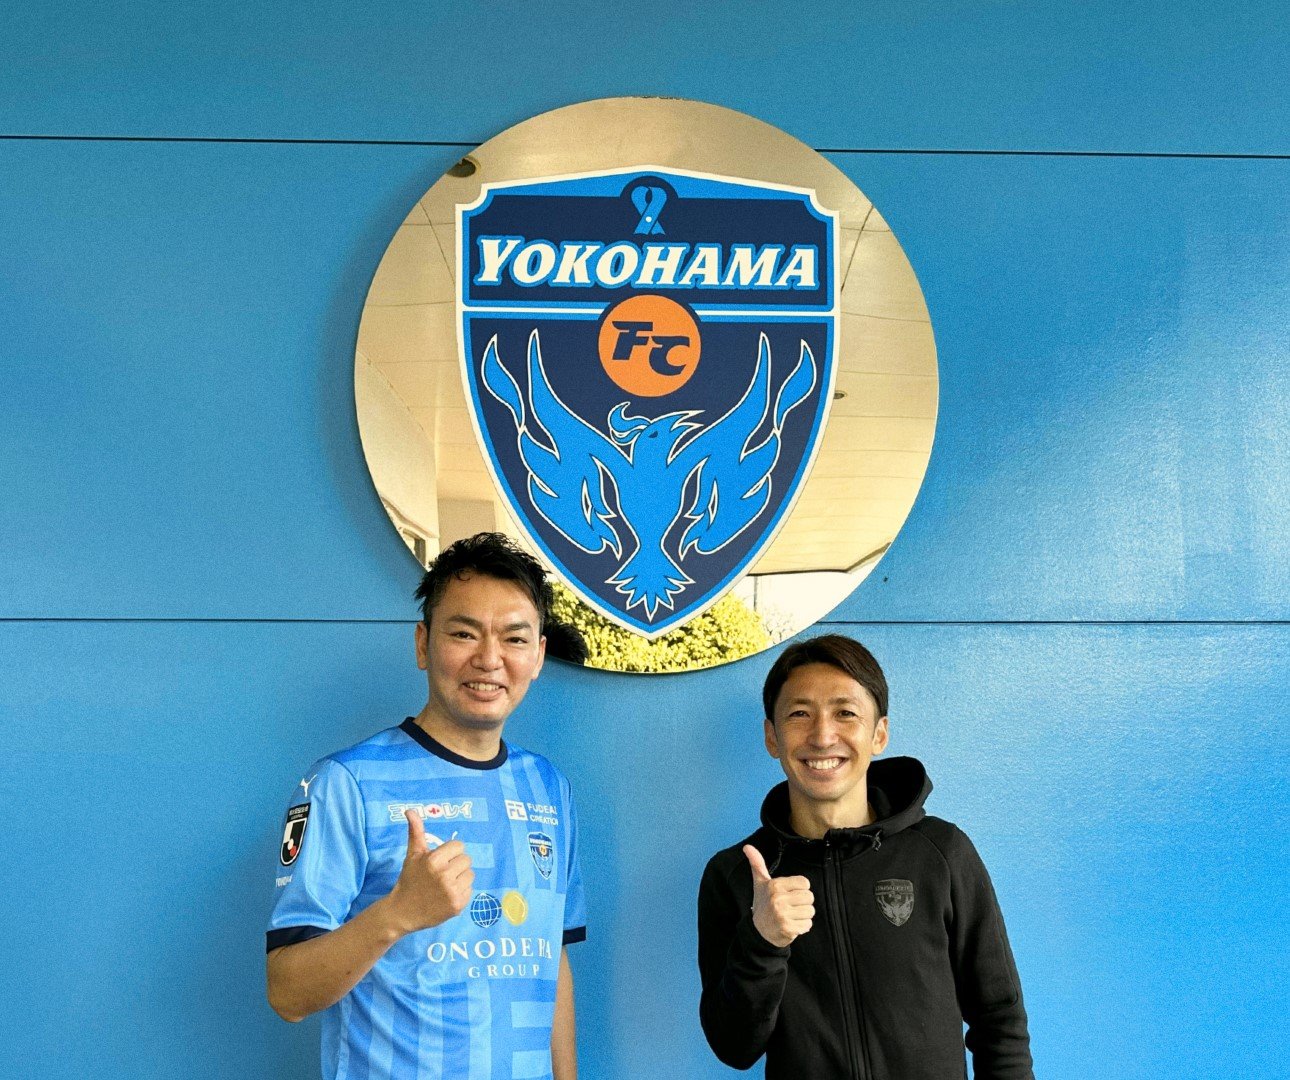 From left, Kenji Ota, Executive Director and President of CODE Meee, and Tomohisa Uchiyama, Club Relations Officer of Yokohama FC